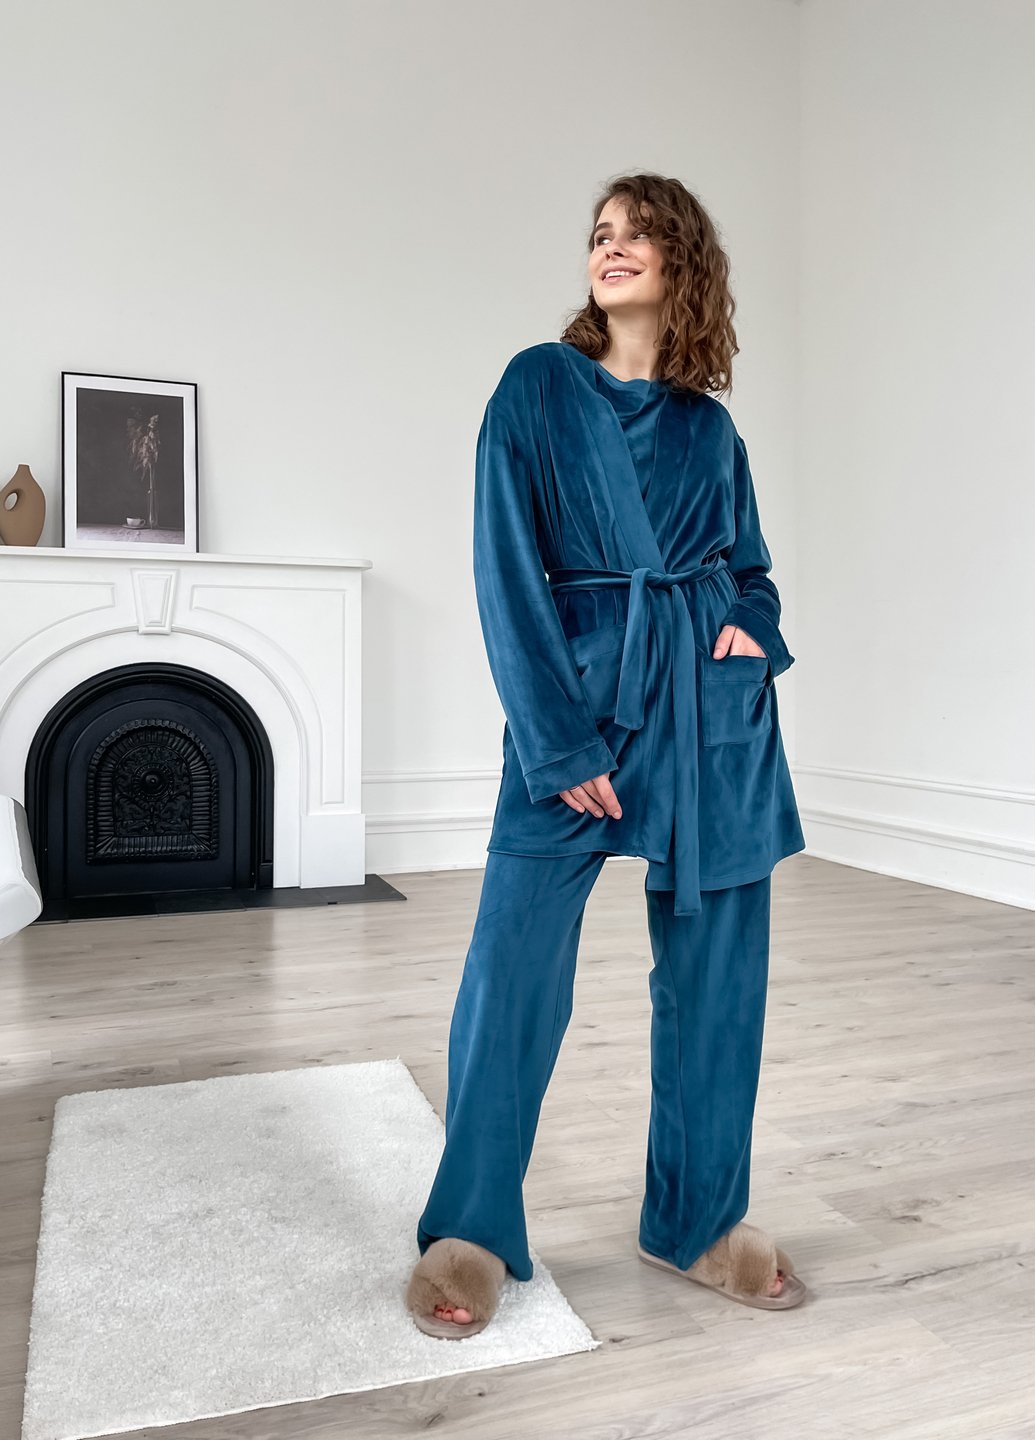 Теплая велюровая женская пижама 3: халат, брюки, футболка бутылочного цвета Merlini Буя 100000214, размер 42-44